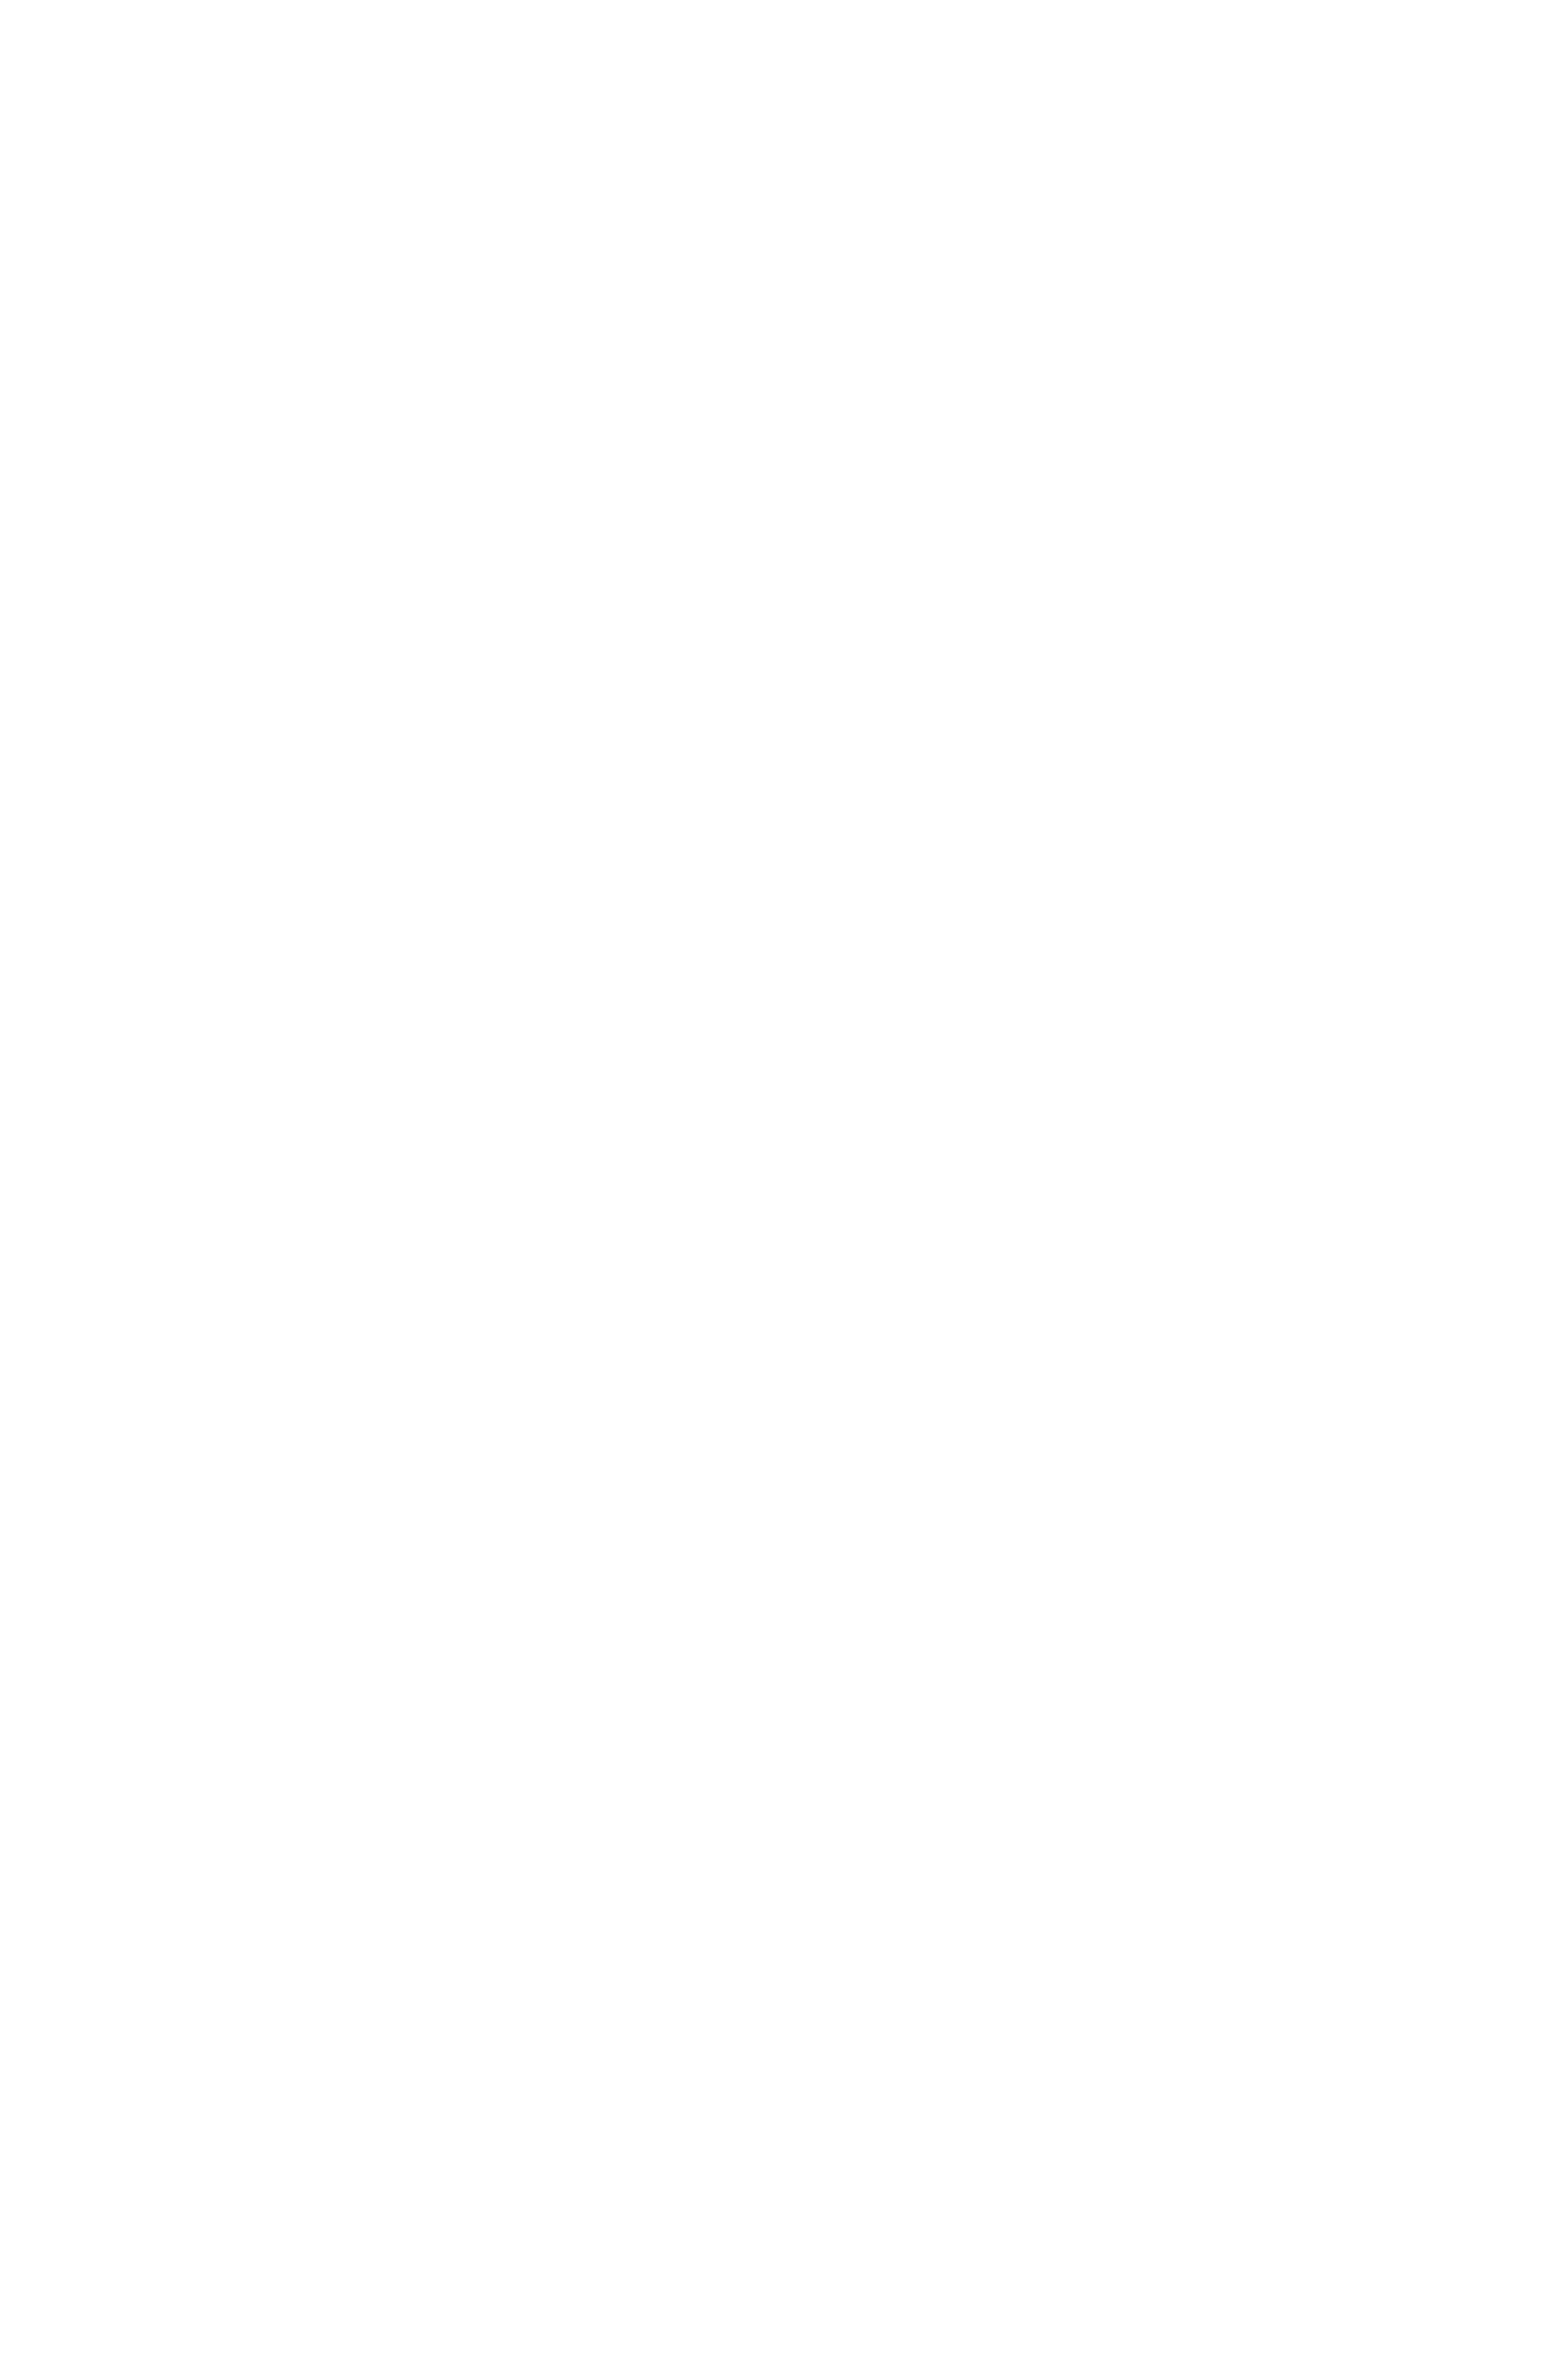 NORDFORM Hagebord opp/ned 134×84 cm Gruffudd